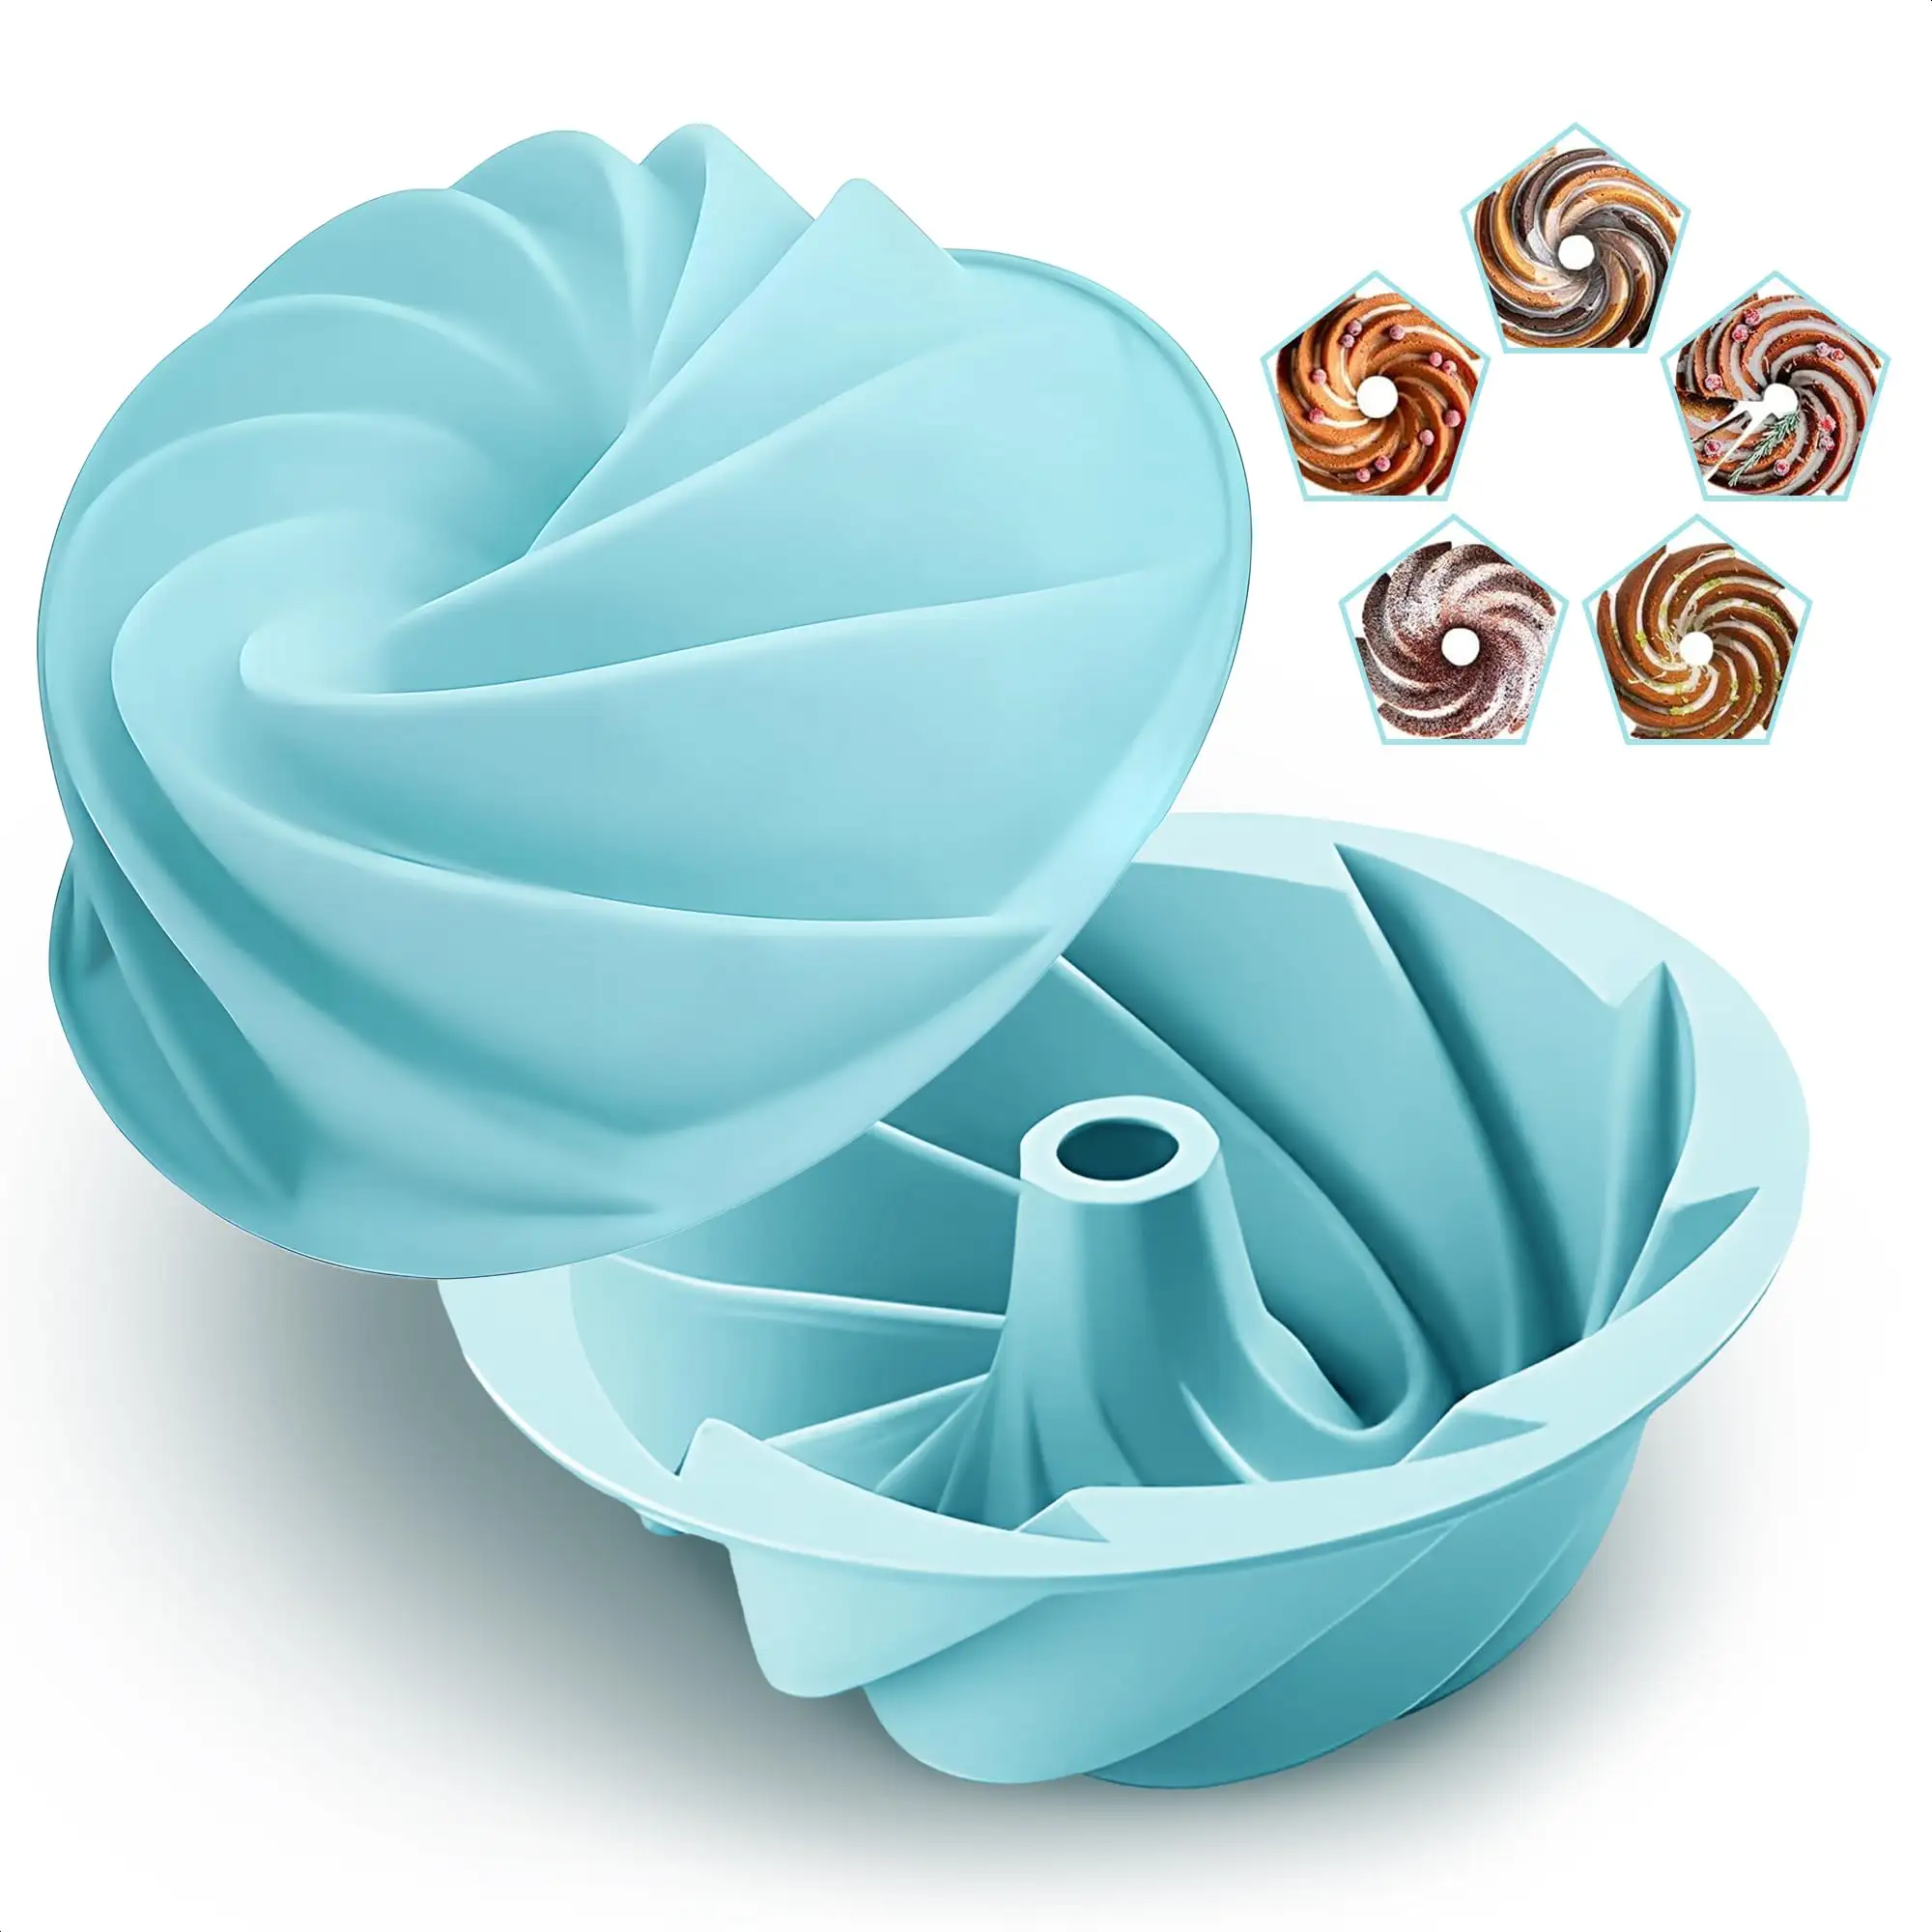 Design di decorazione in Silicone Bundt 3D torta di cottura Mini stampi rotondi tazze Set di strumenti per la cottura della torta decorazione